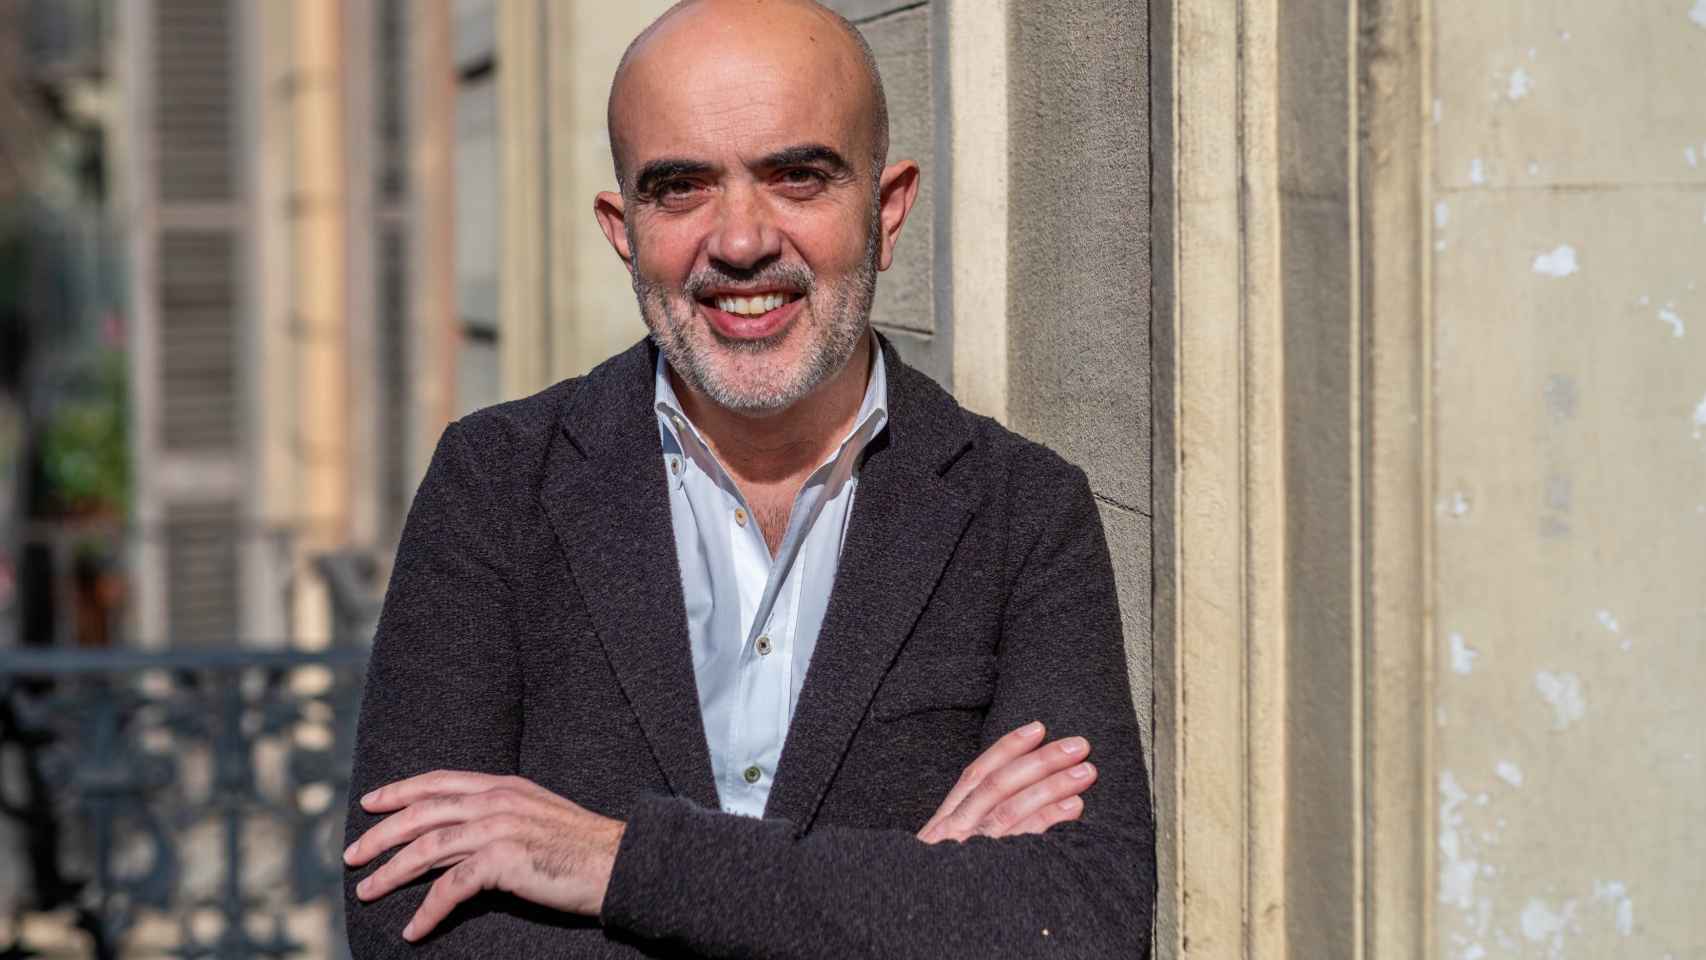 El líder del PP en Barcelona, Daniel Sirera